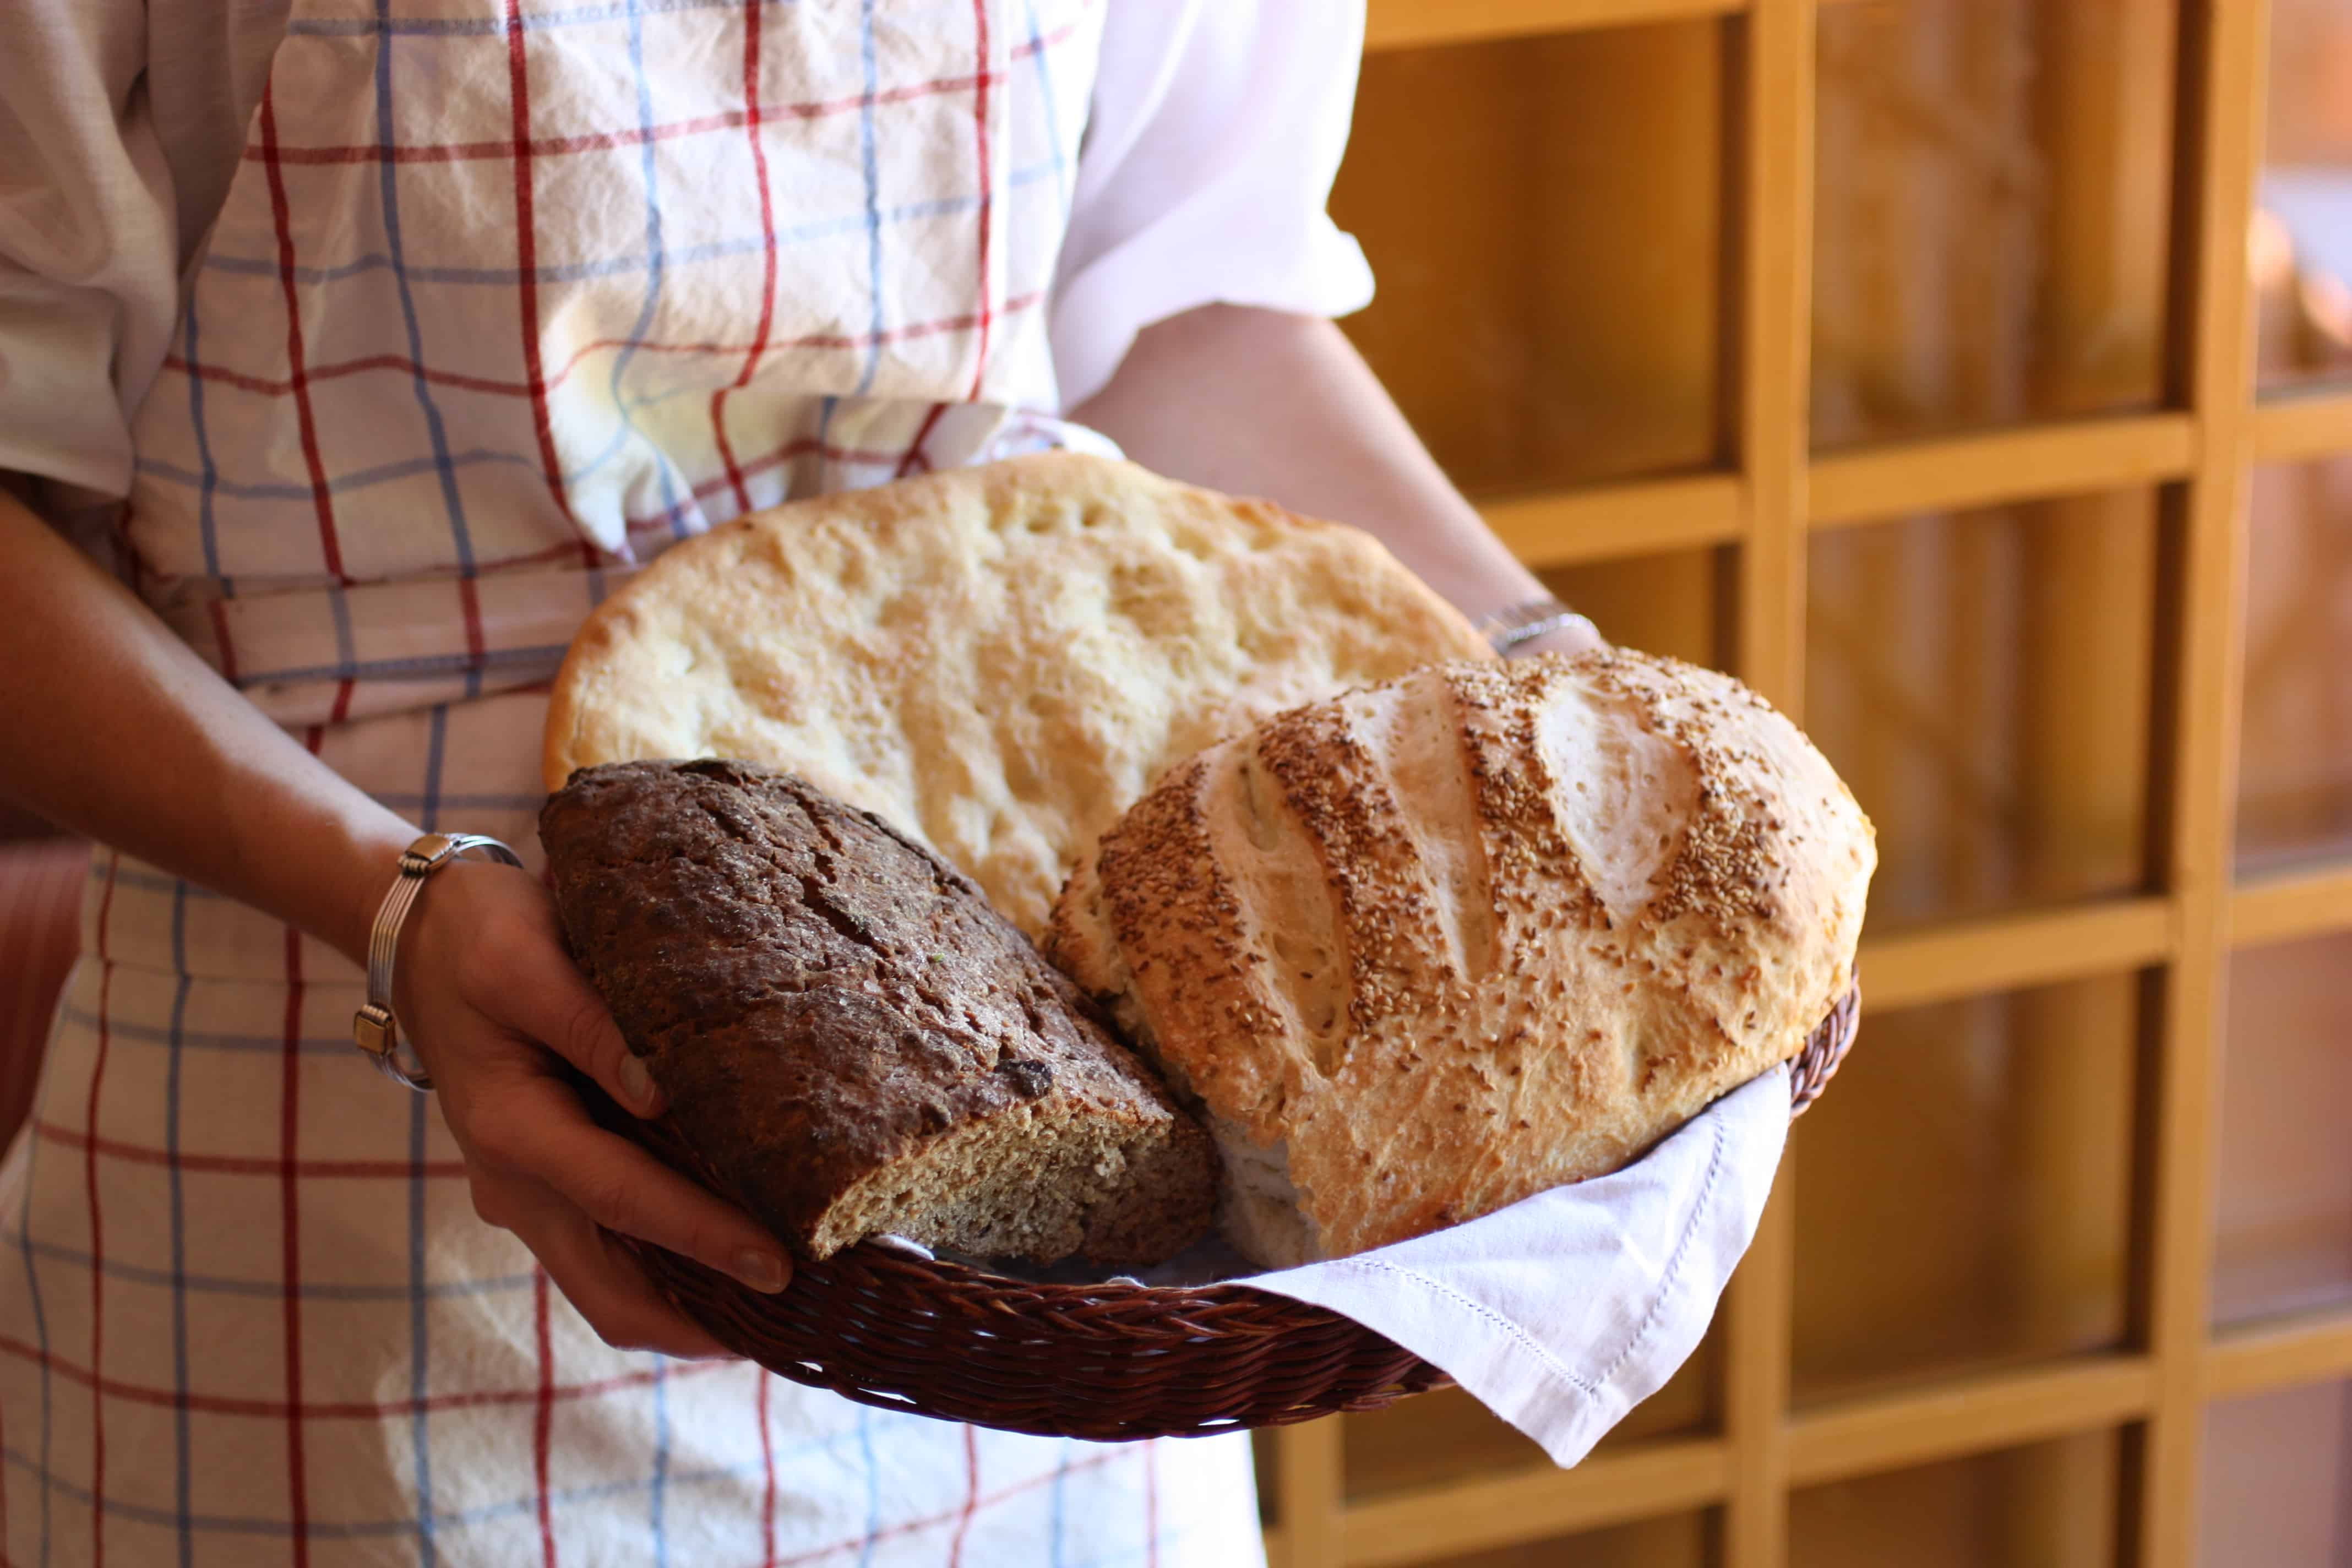 Rustic Italian Bread